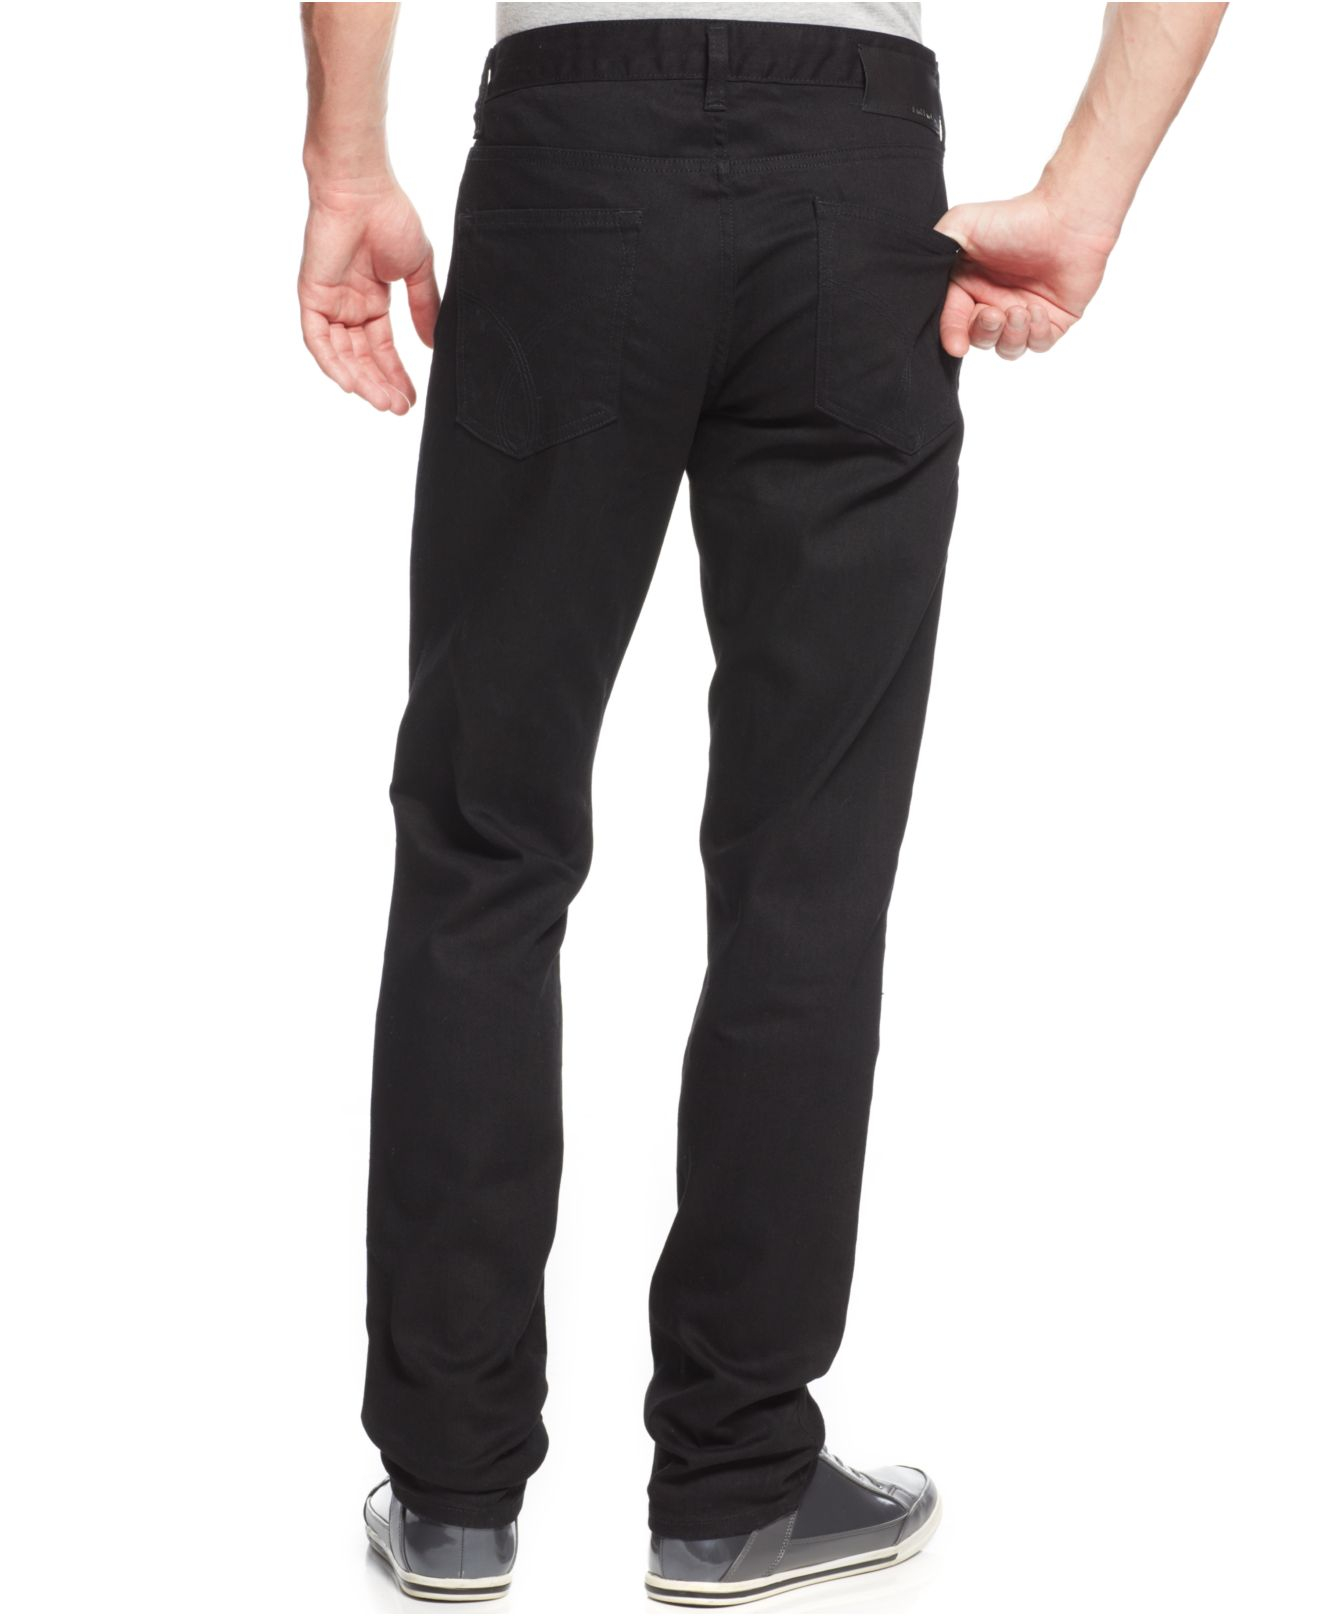 Lyst - Calvin Klein Jeans Slim-fit Black Pants in Black for Men